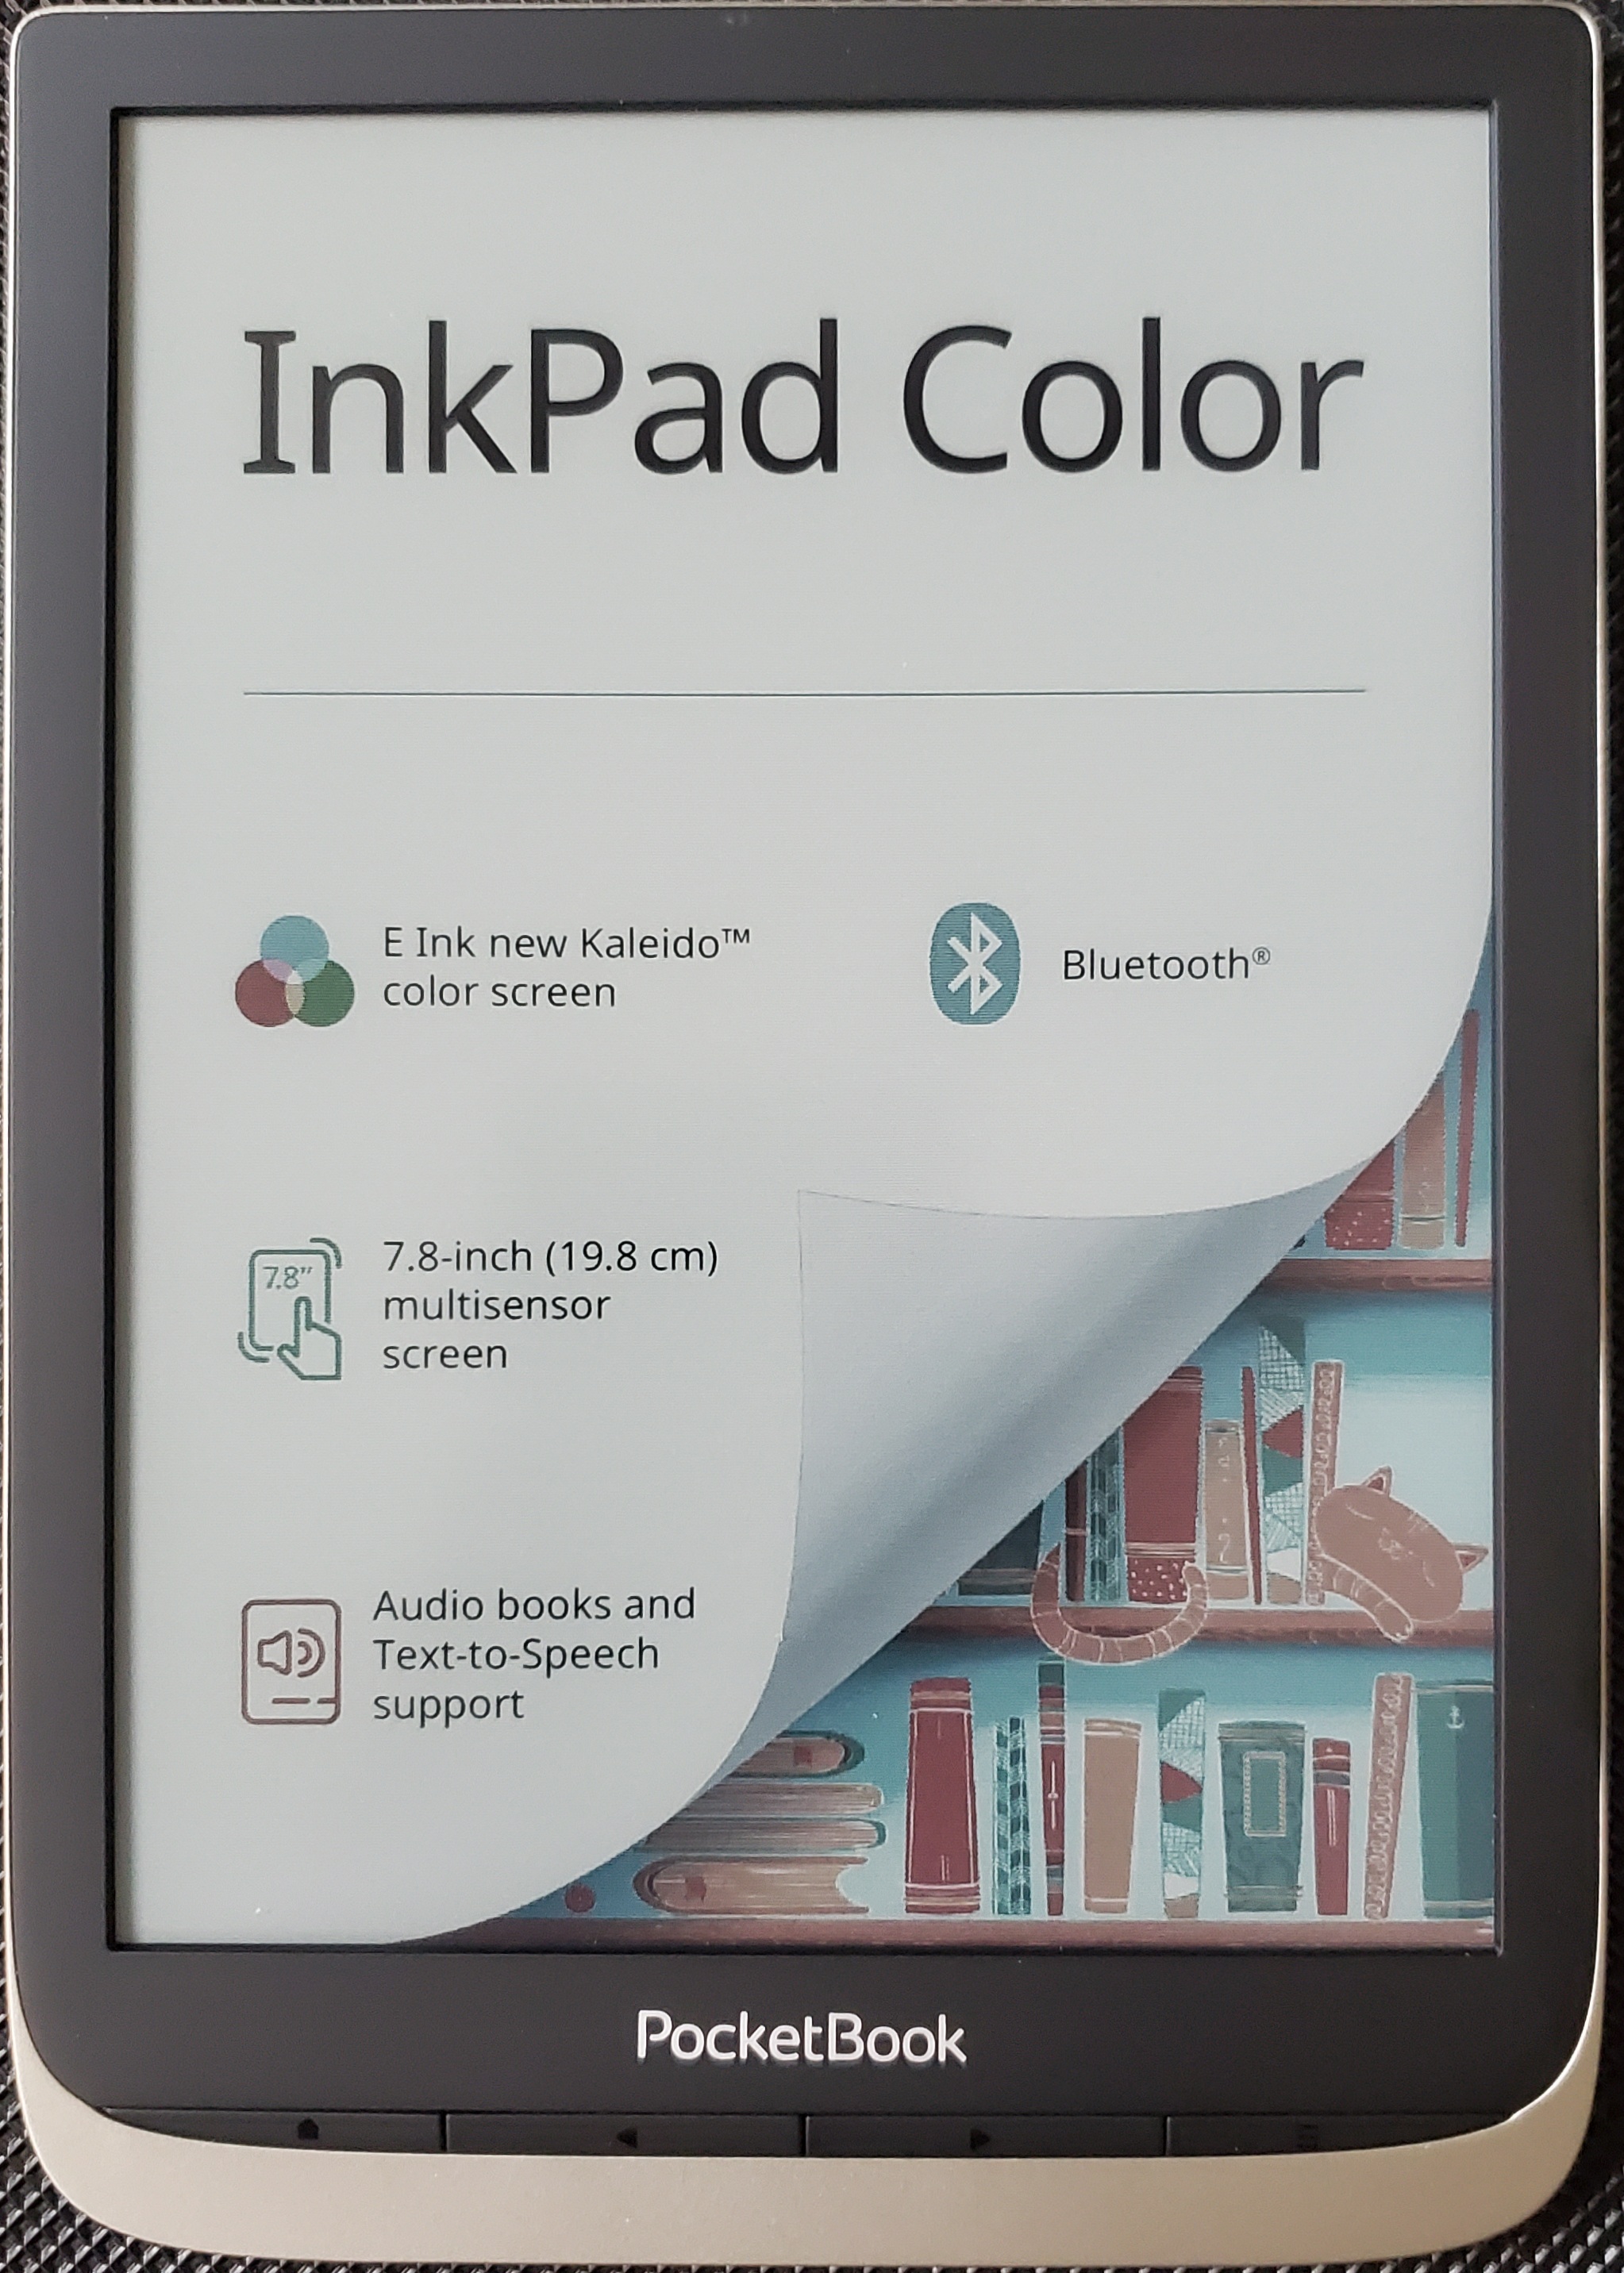 Pocketbook InkPad Color 3 - Latest Generation 